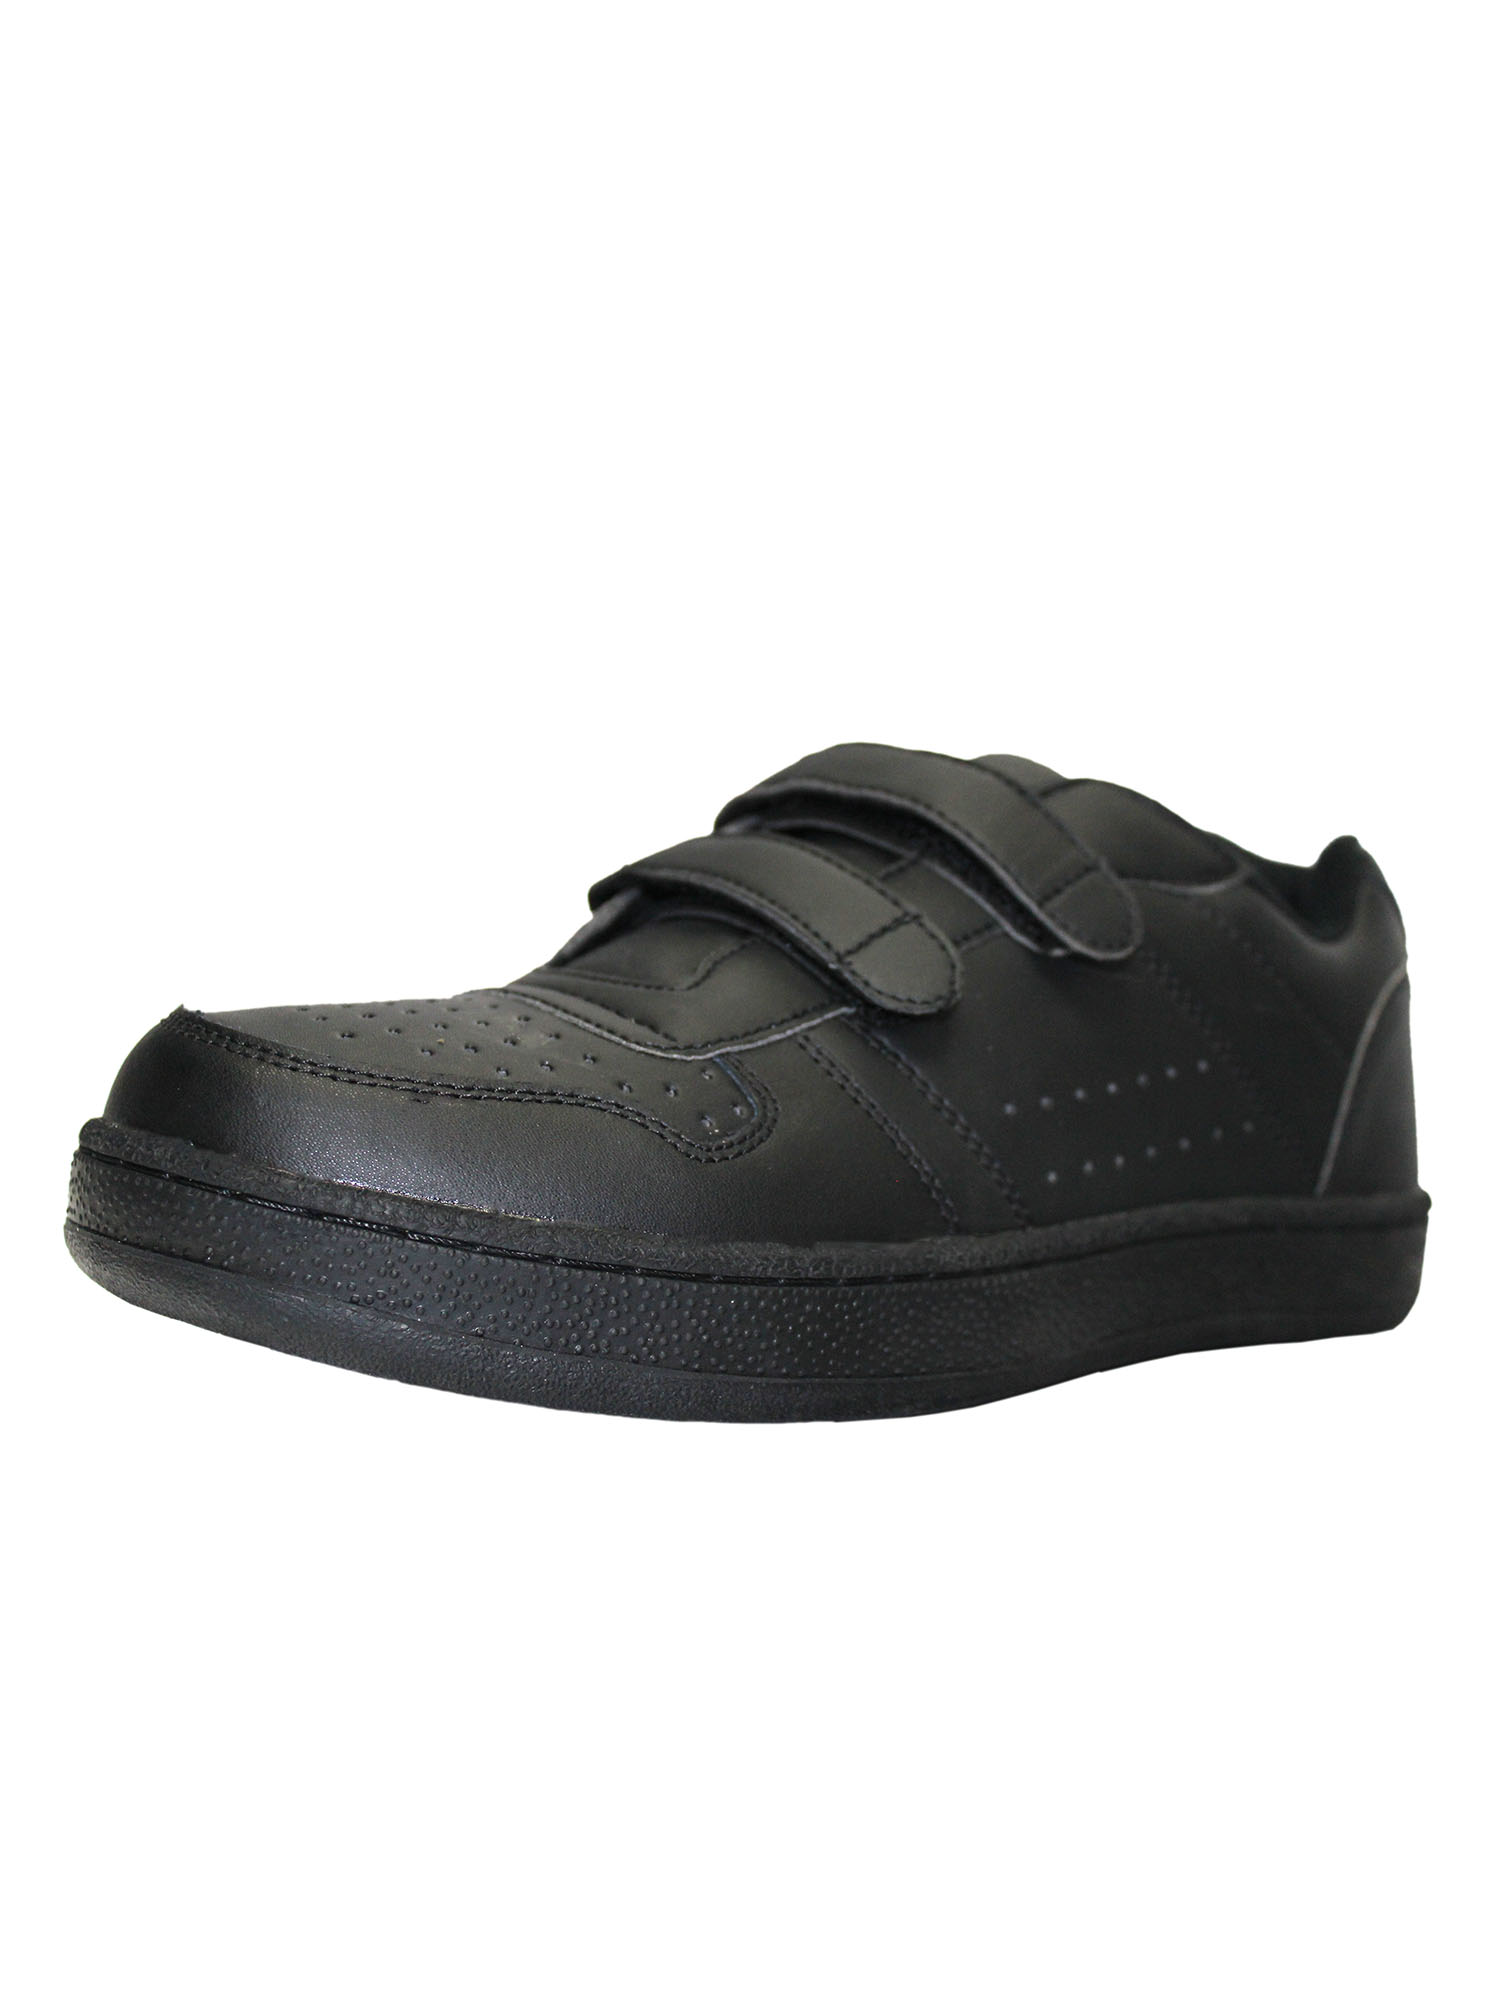 Tanleewa Men's Leather Strap Sneakers Lightweight Hook and Loop Walking Shoe Size 4 Adult Male - image 1 of 4